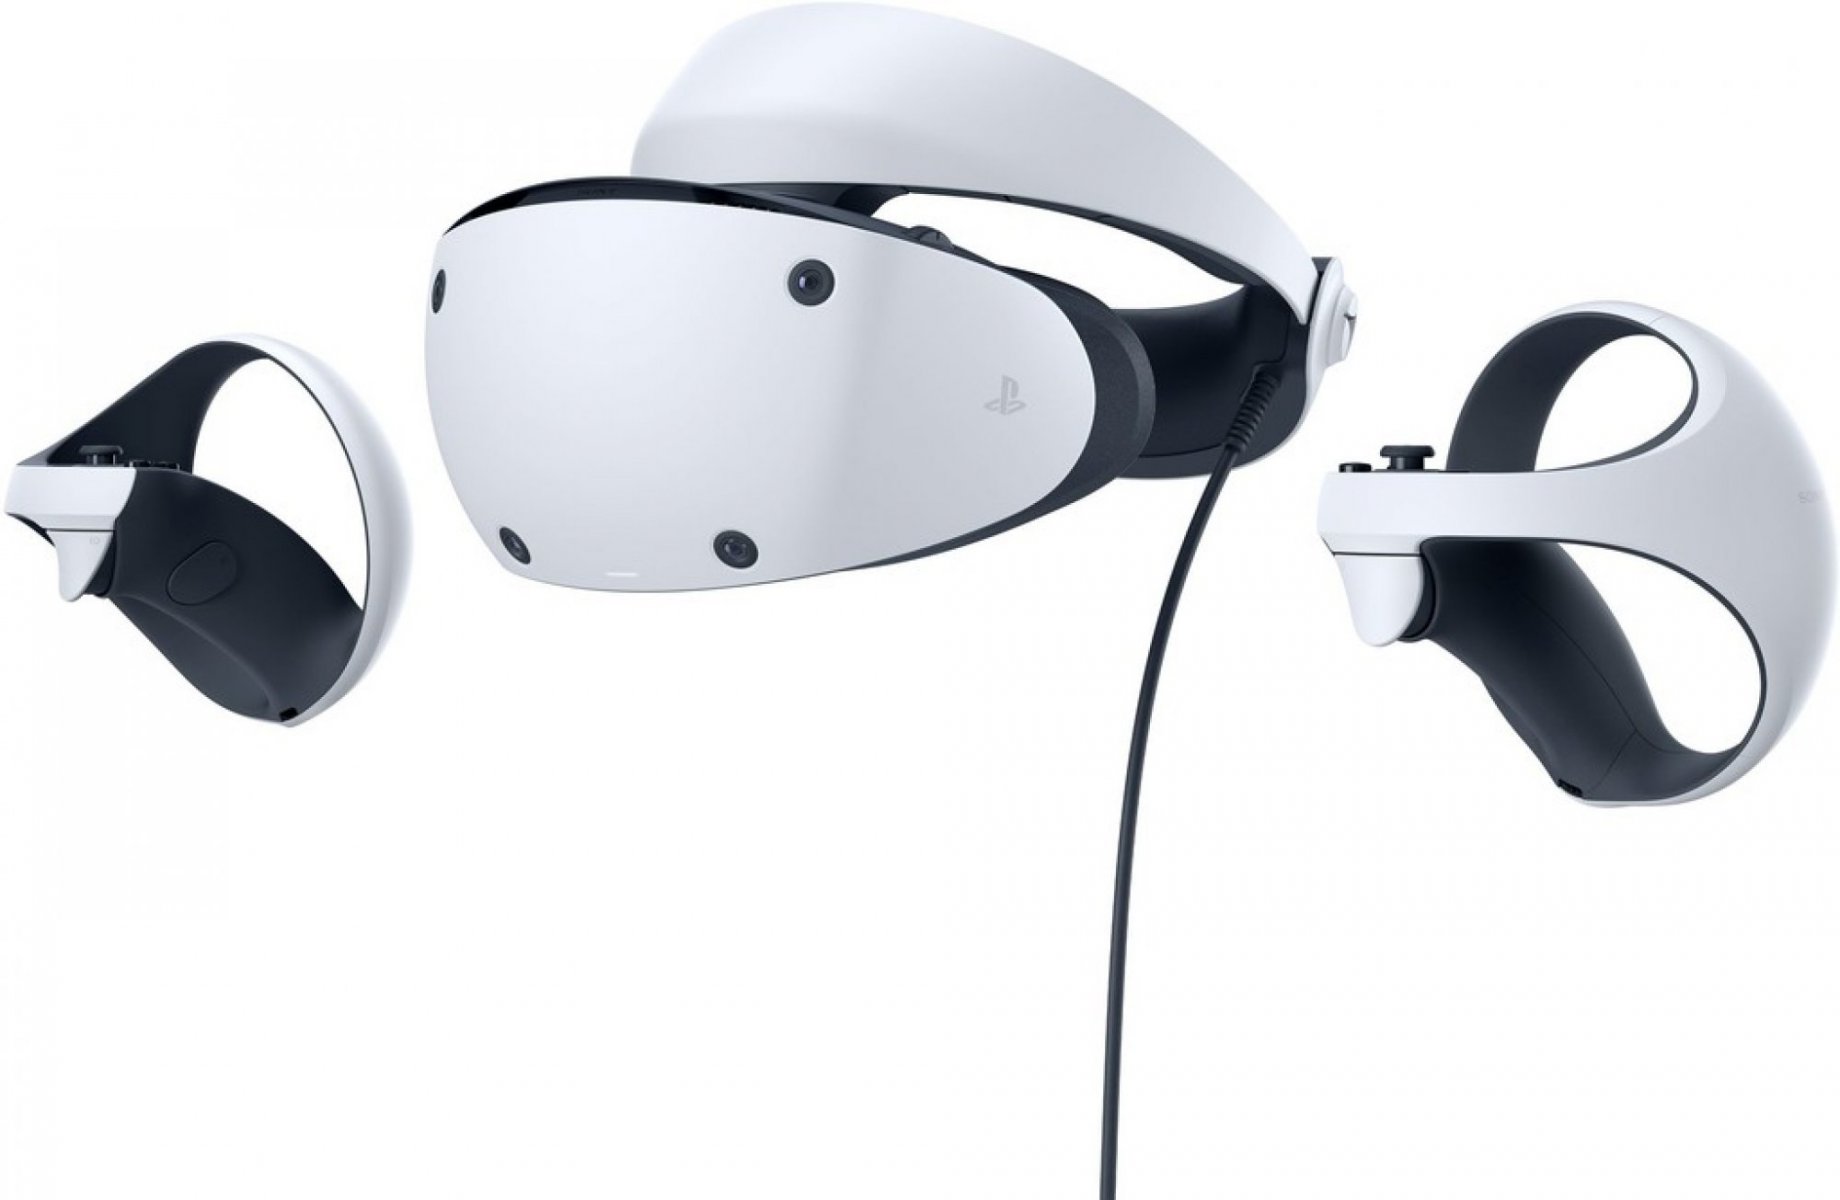 Sony PlayStation VR2 - PlayStation VR2 headset